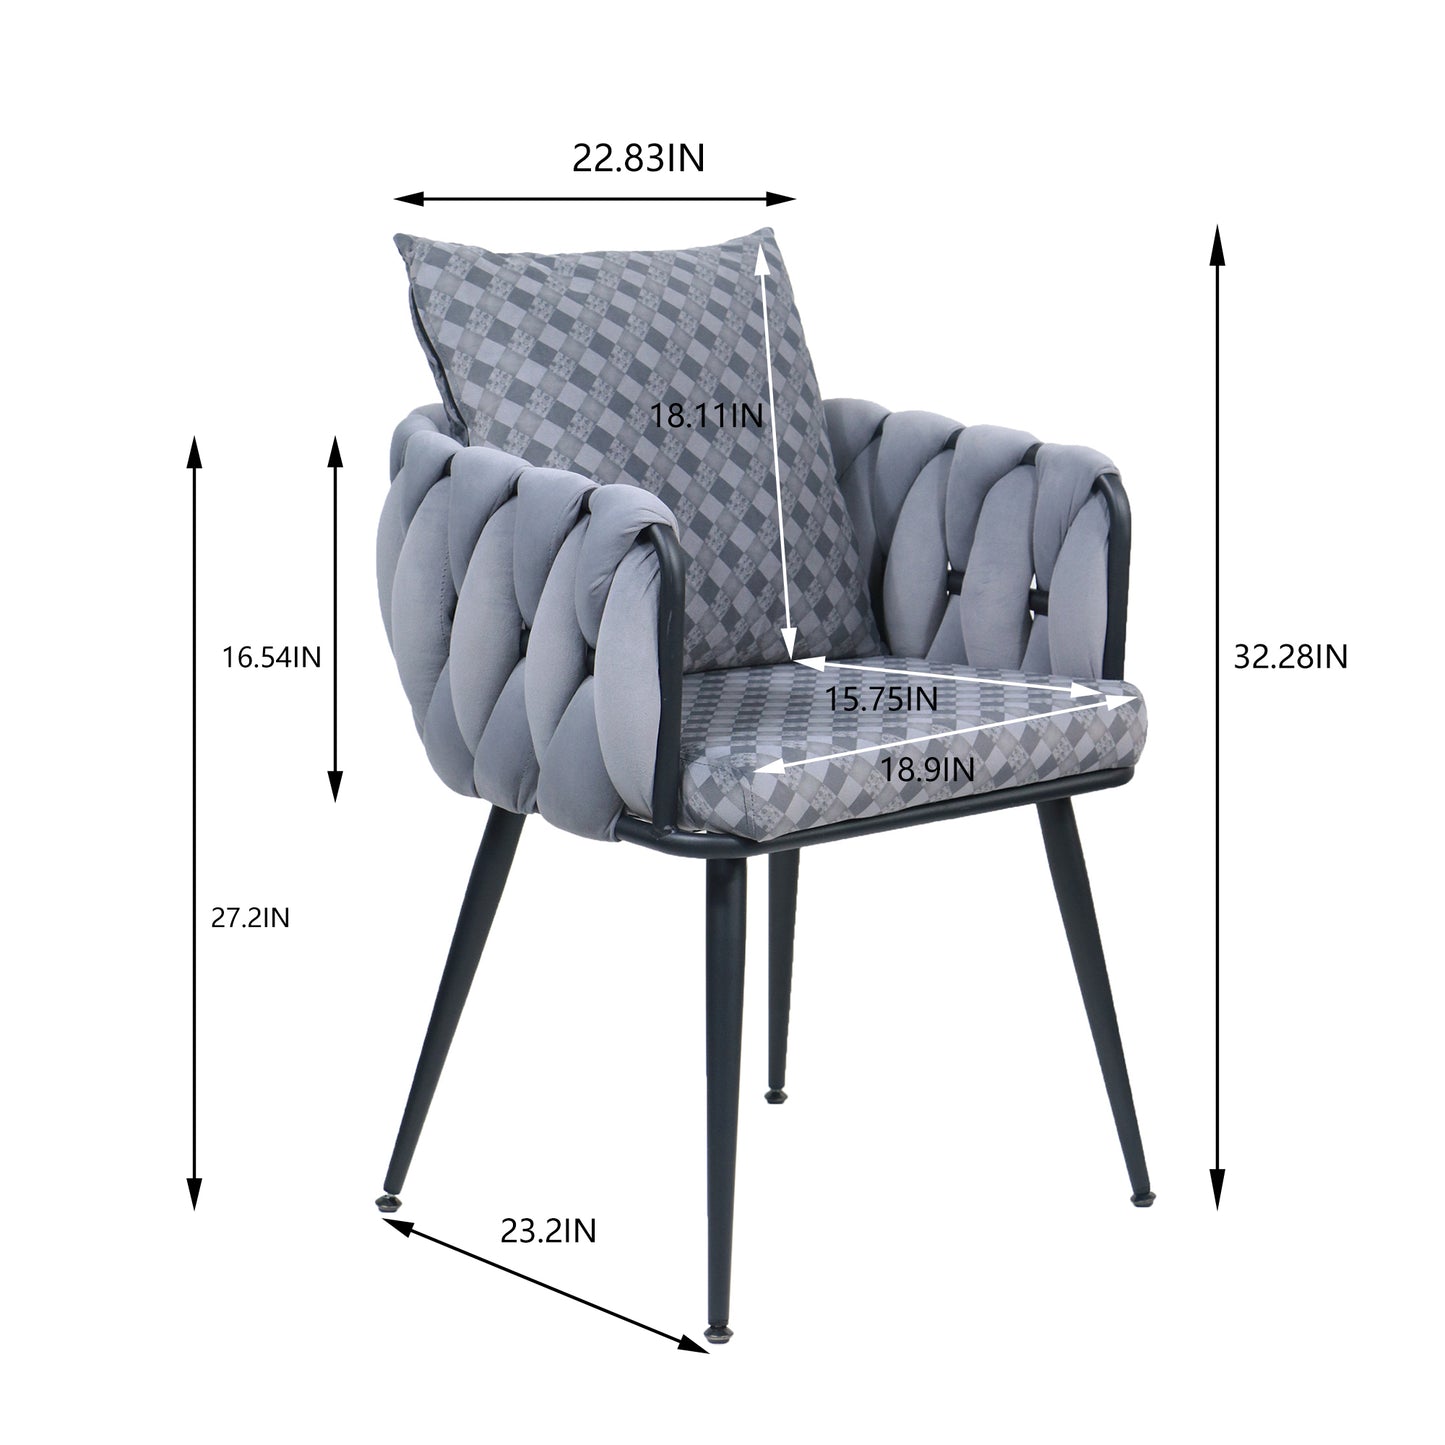 London Dining Chair Gray